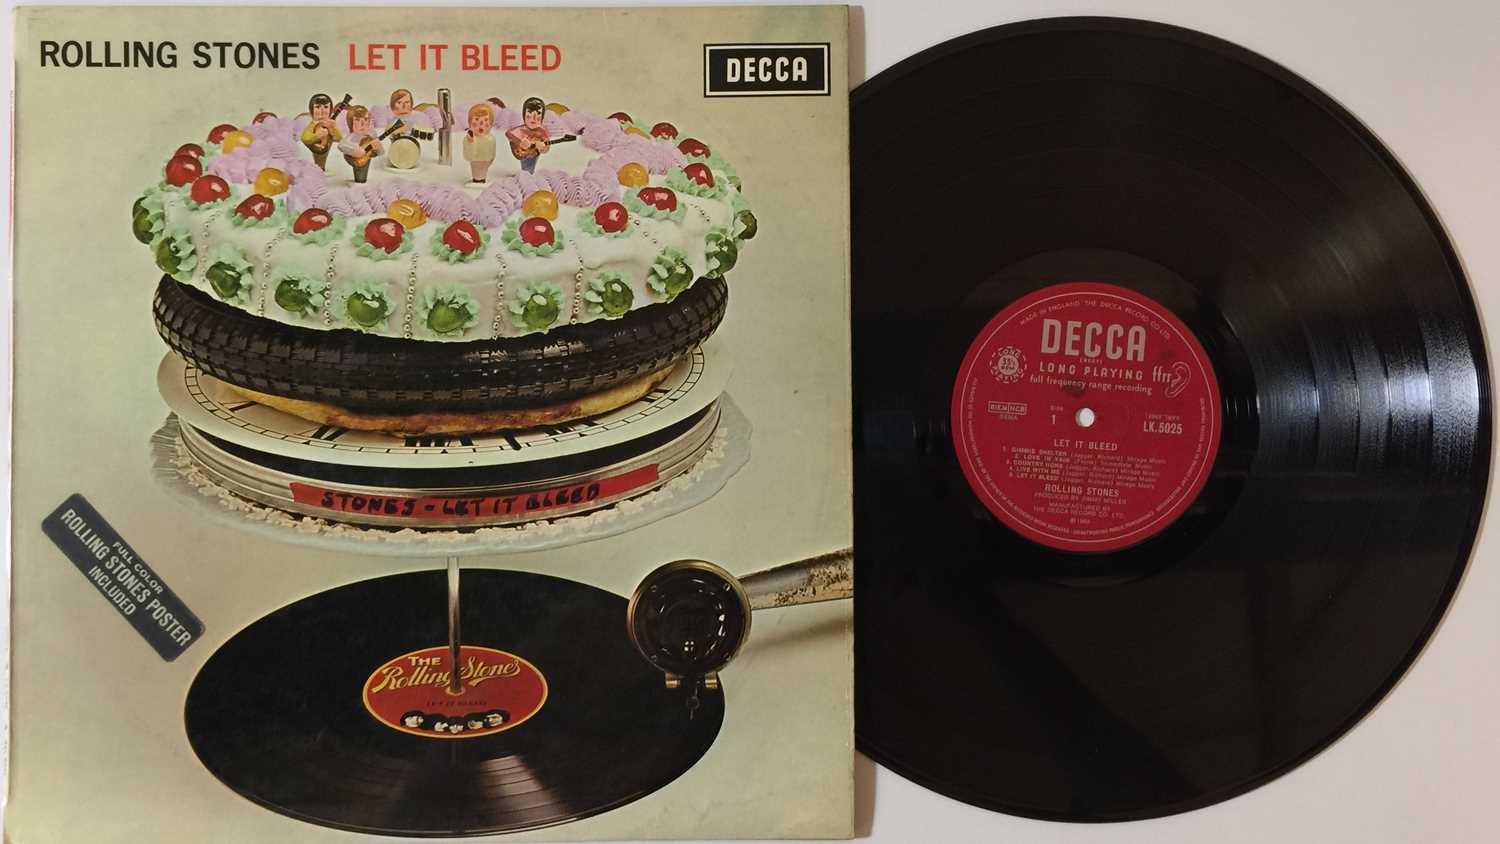 THE ROLLING STONES - LET IT BLEED LP (COMPLETE ORIGINAL UK MONO COPY - LK 5025).